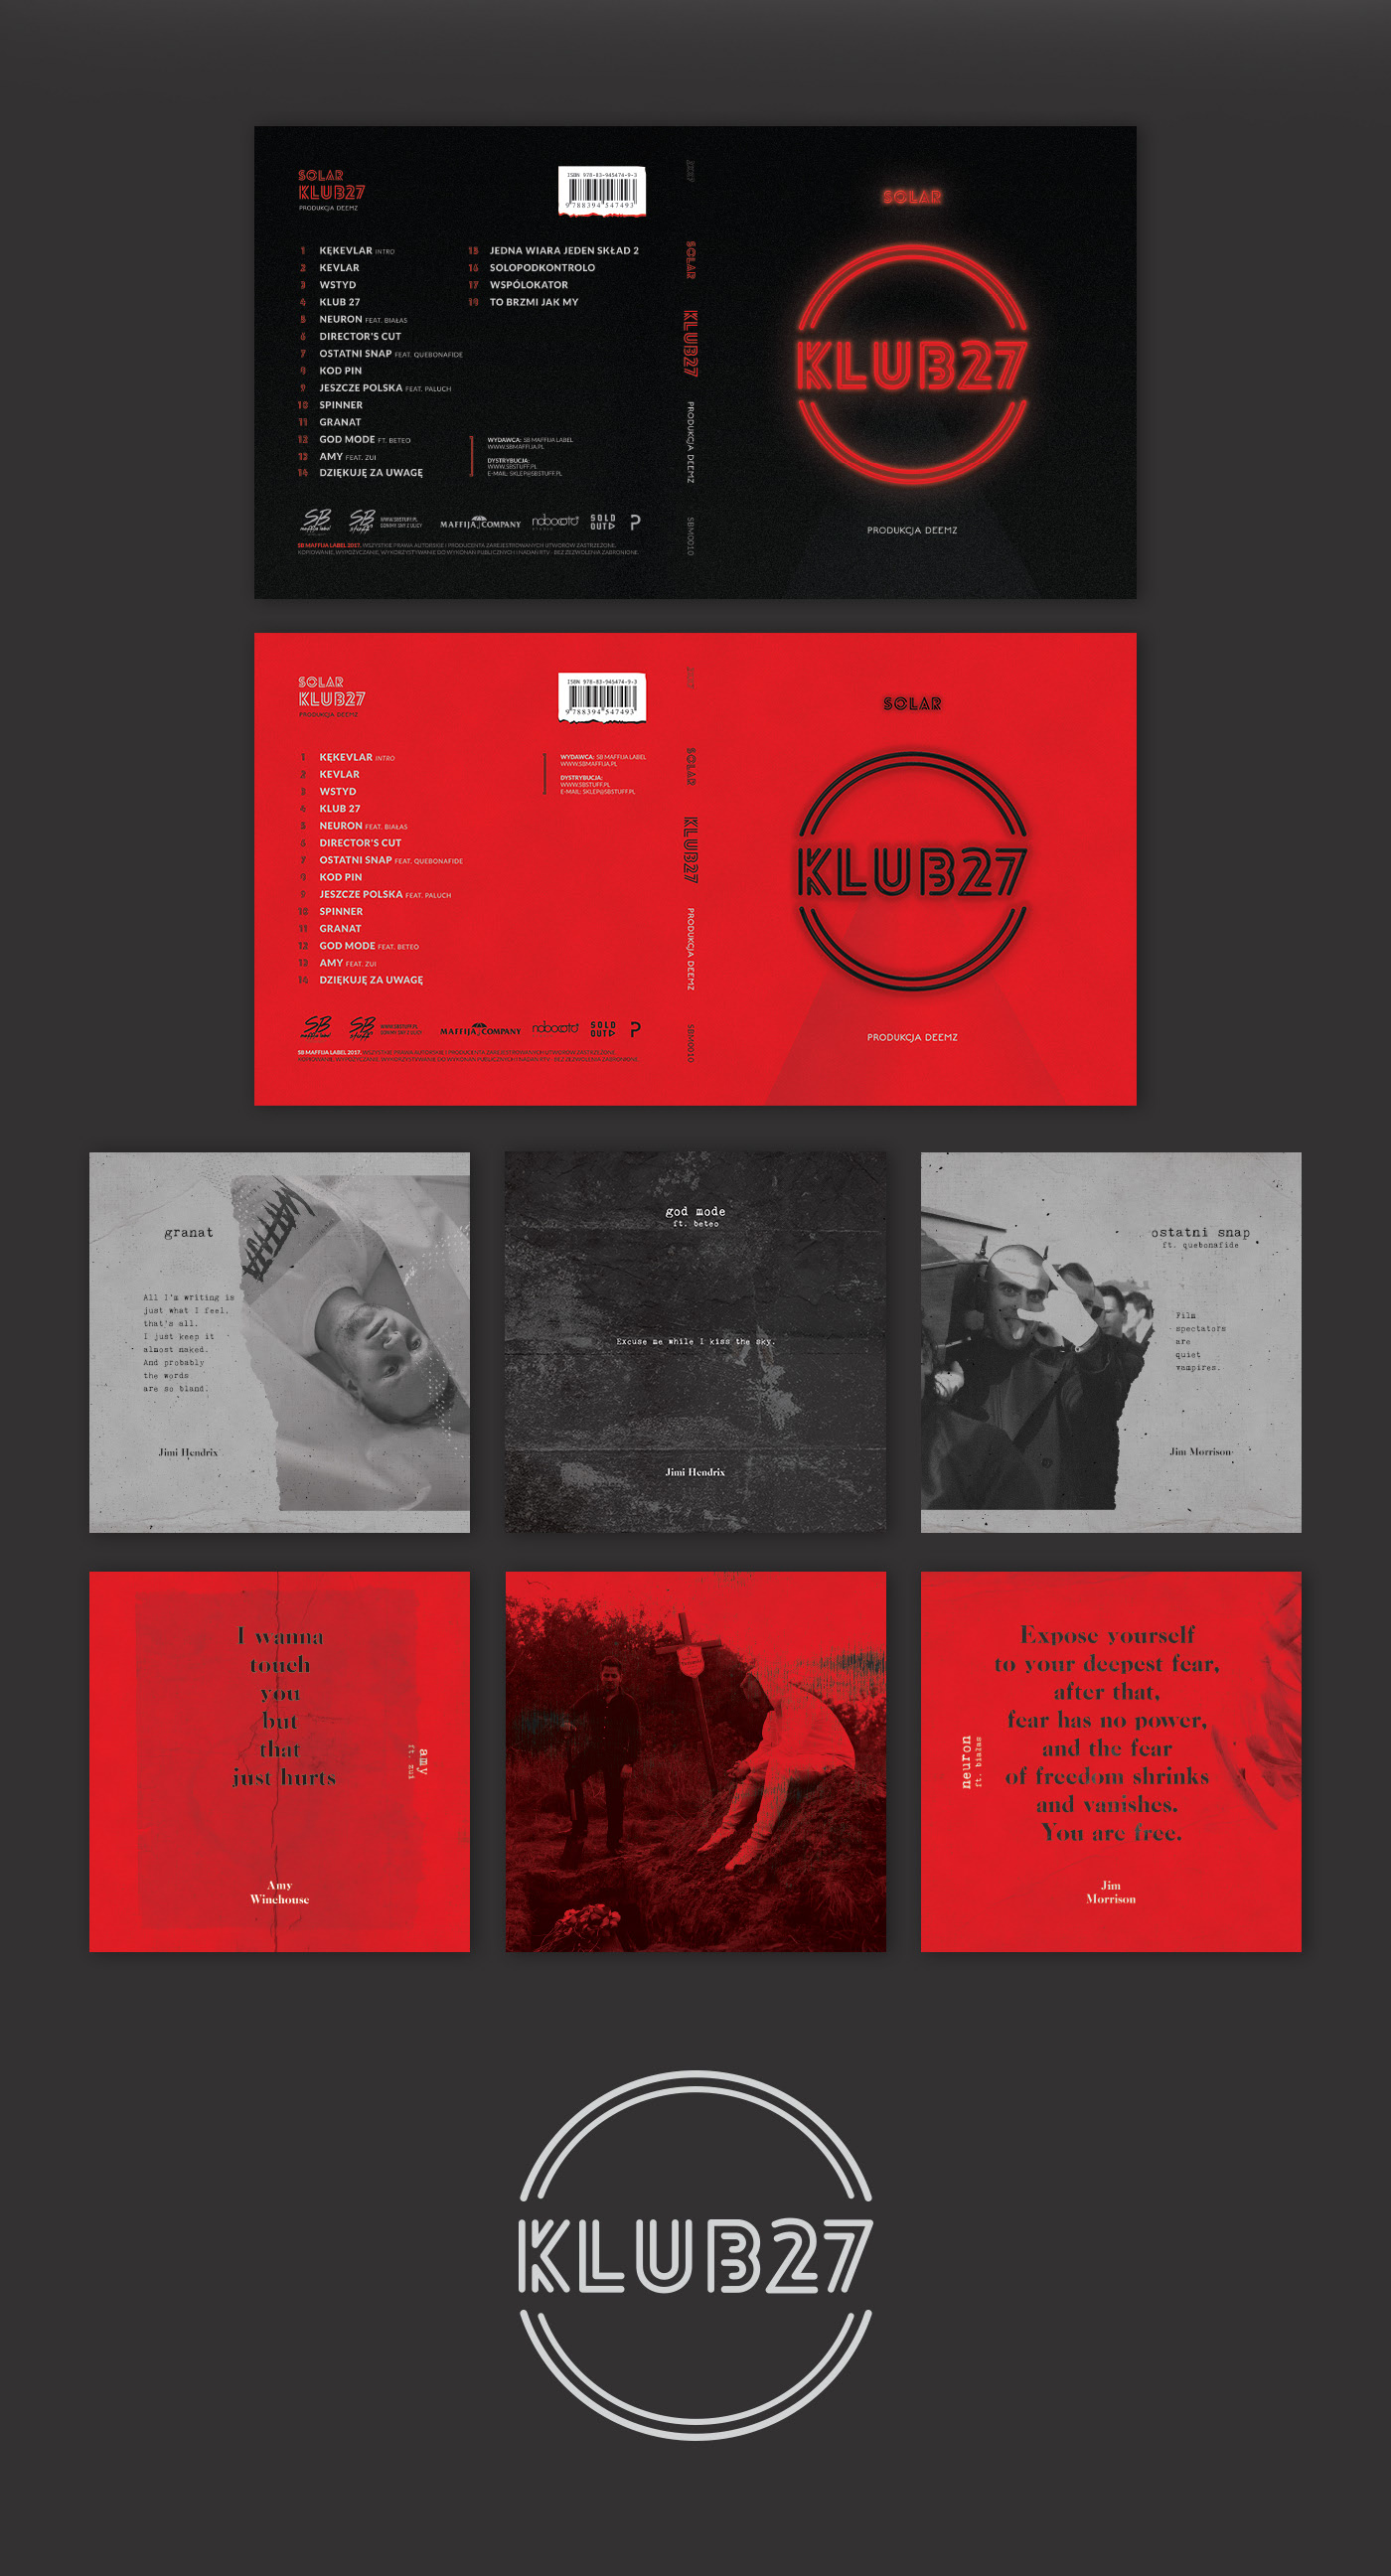 solar - klub27 (prod. deemz) / album package design on Behance